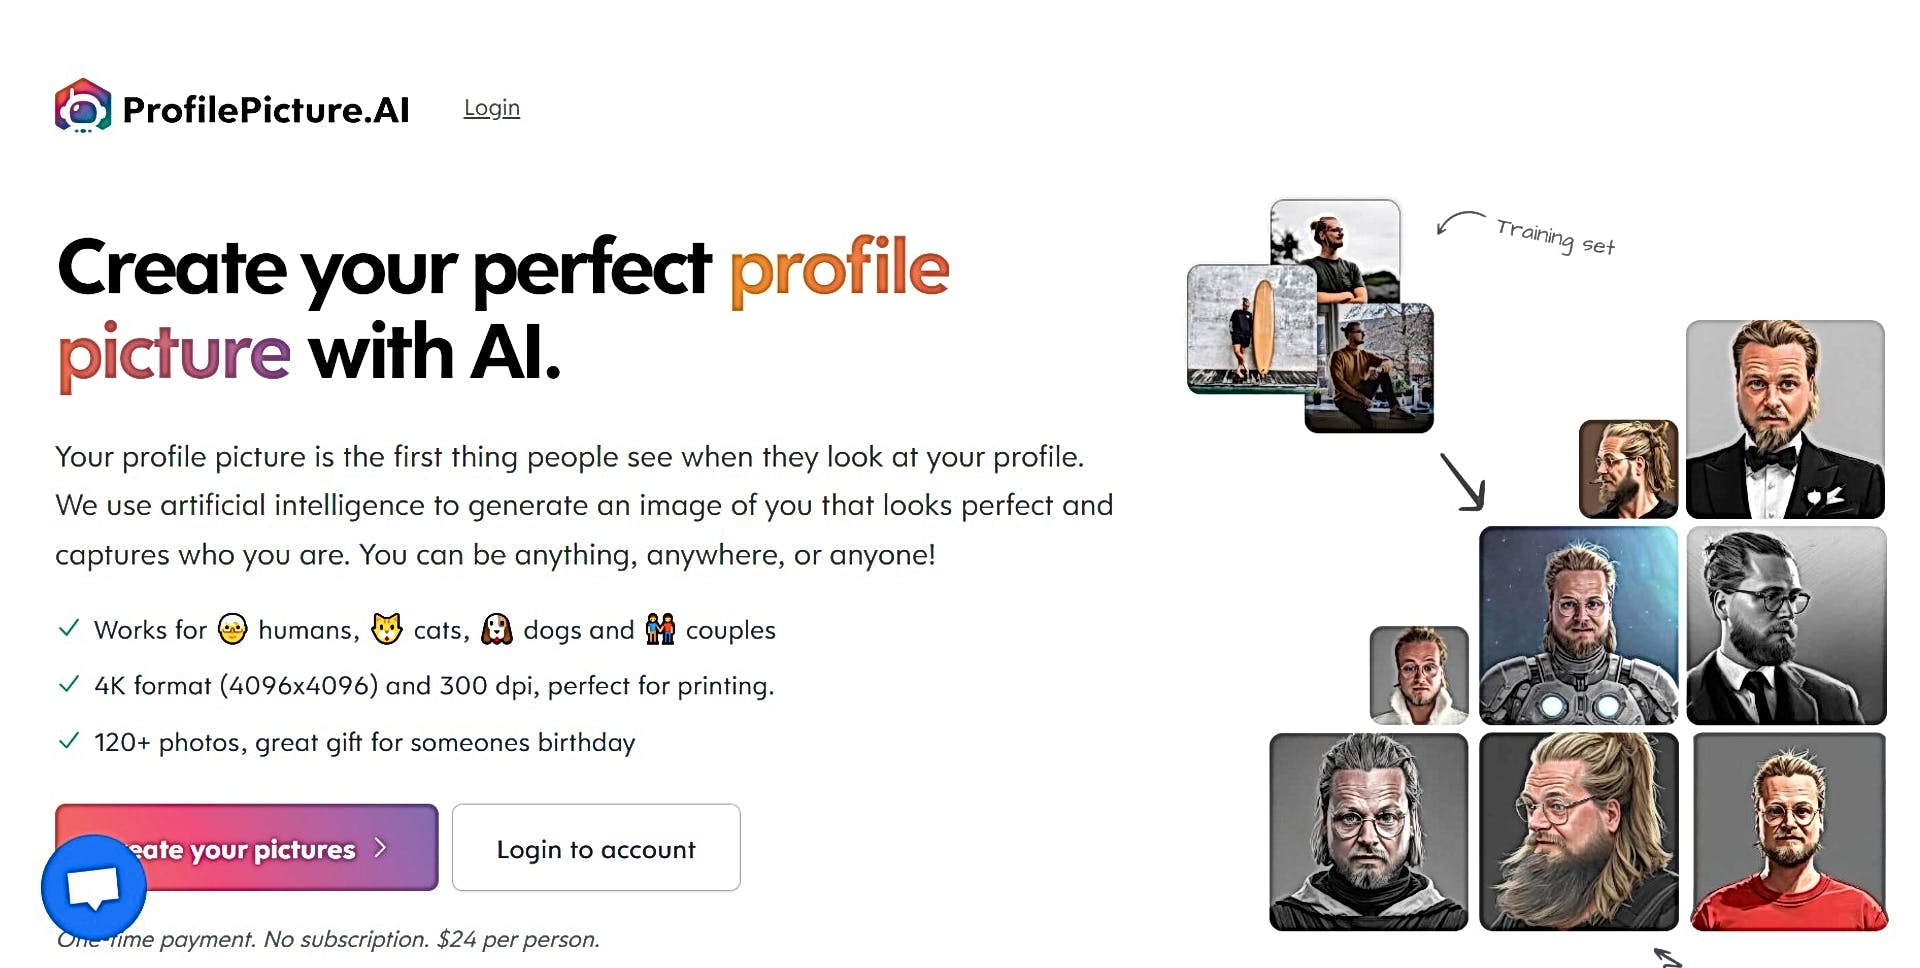 Profile Picture AI featured